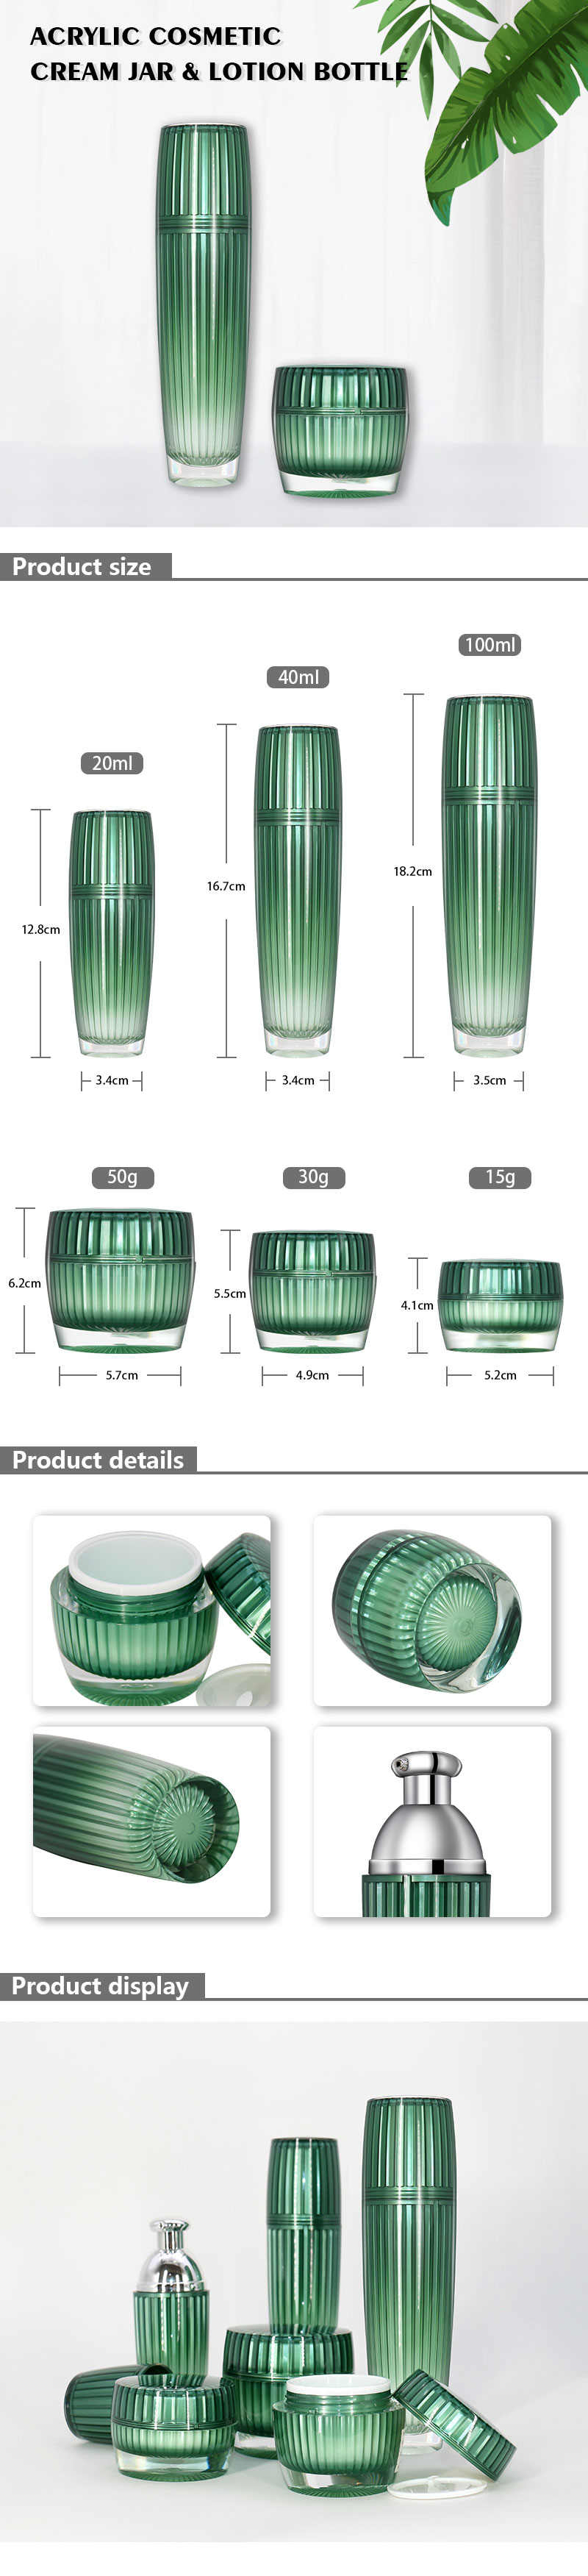 Green Acrylic Cream Jar